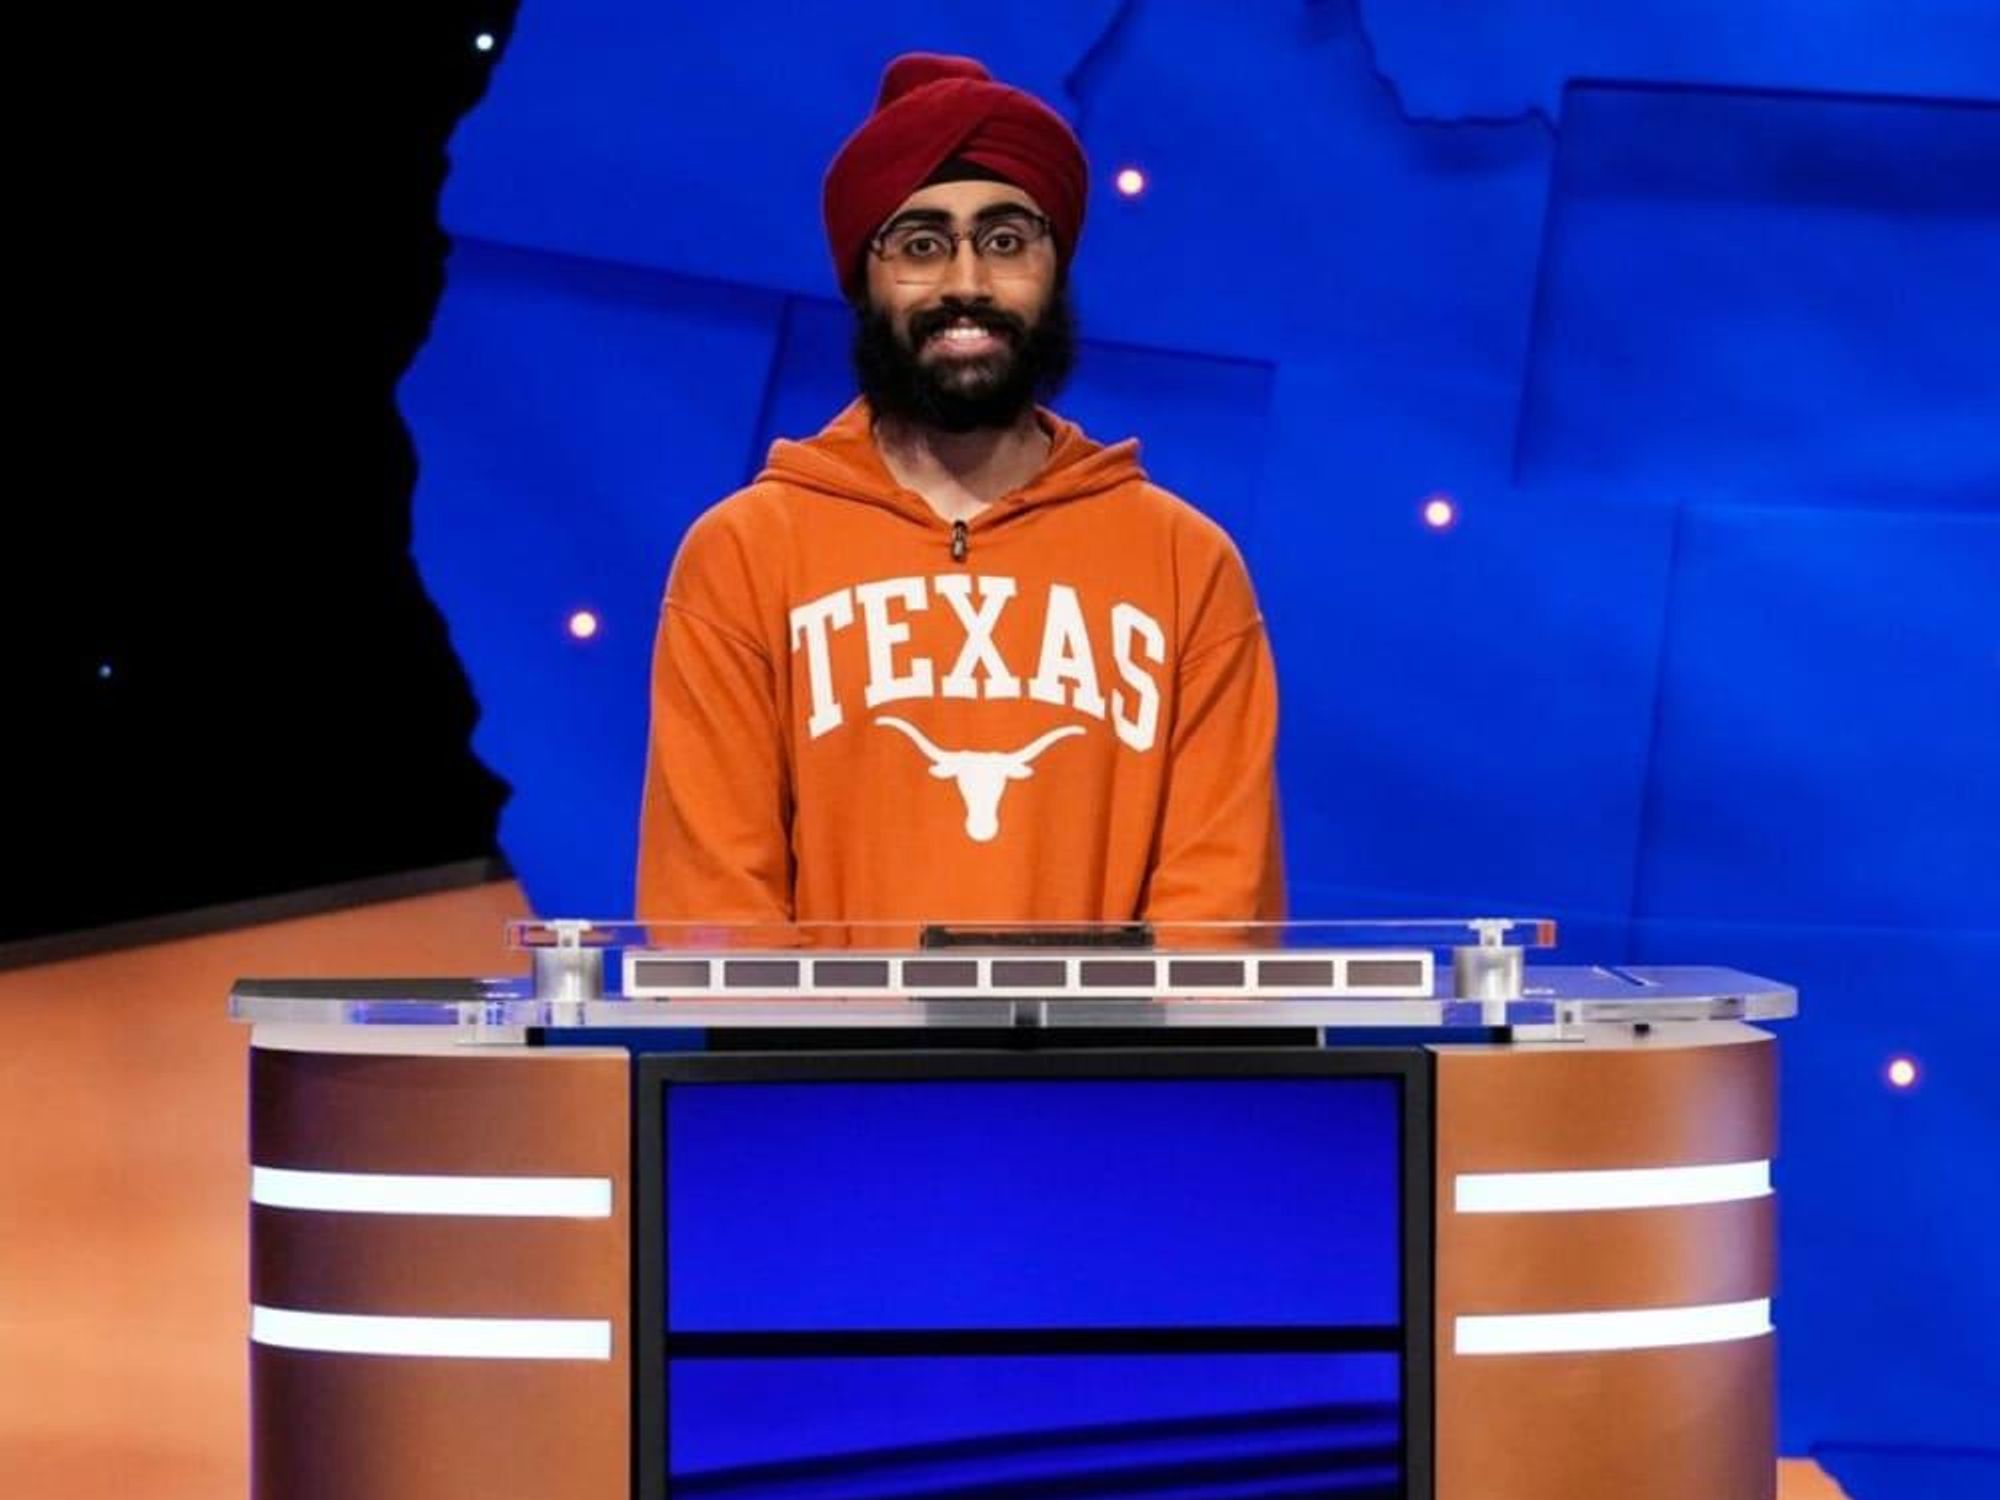 Jaskaran Singh Jeopardy contestant